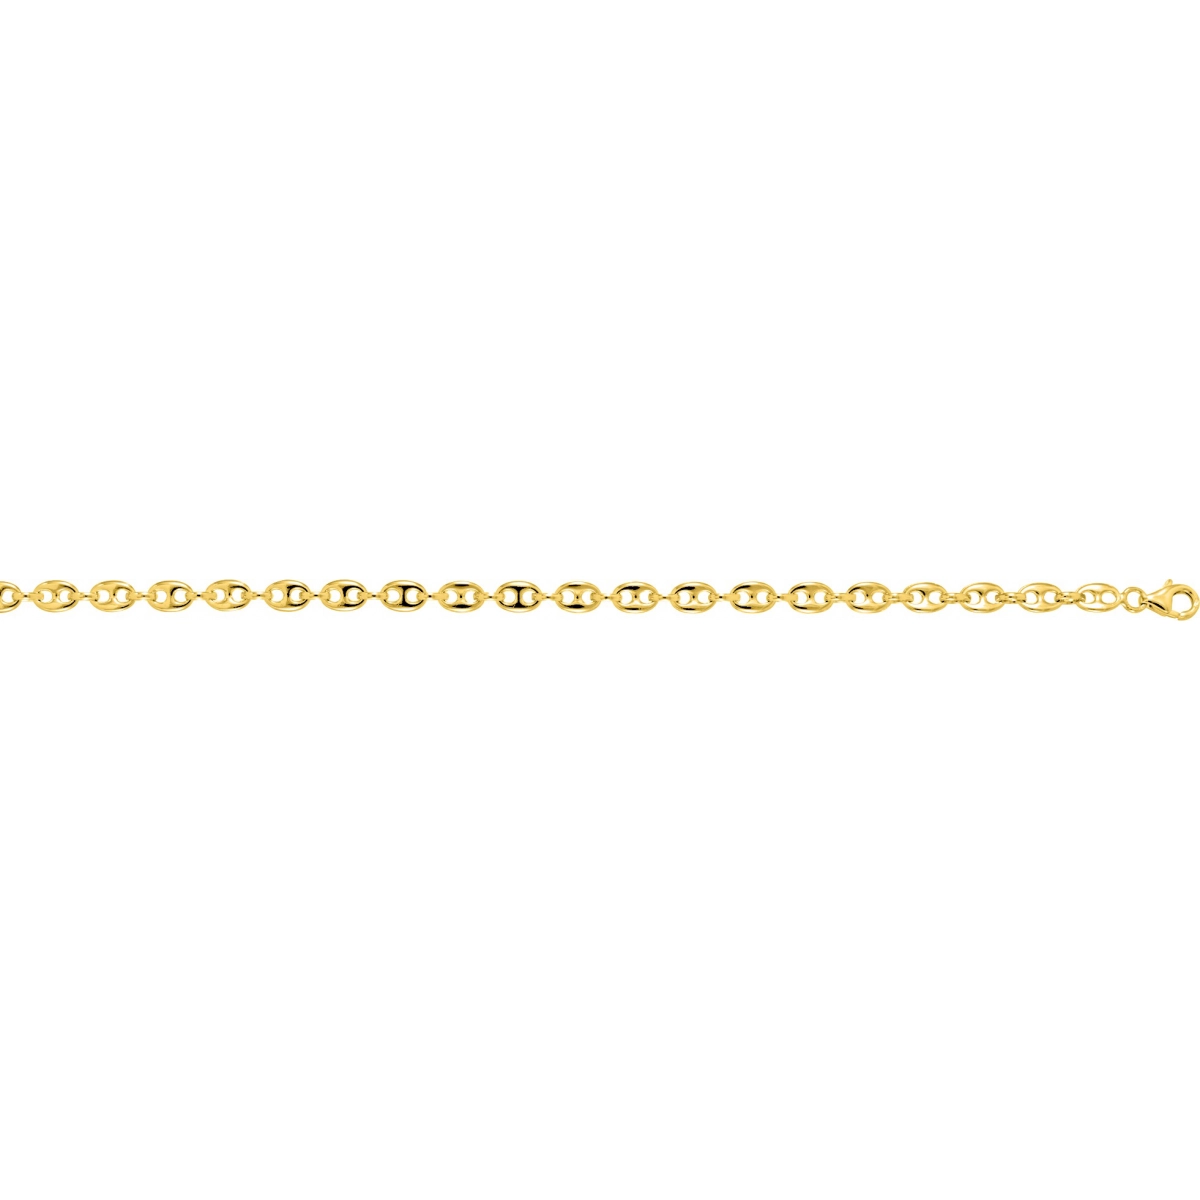 Bracelet gold plated Brass  - Size: 18  Lua Blanca  101160B.18